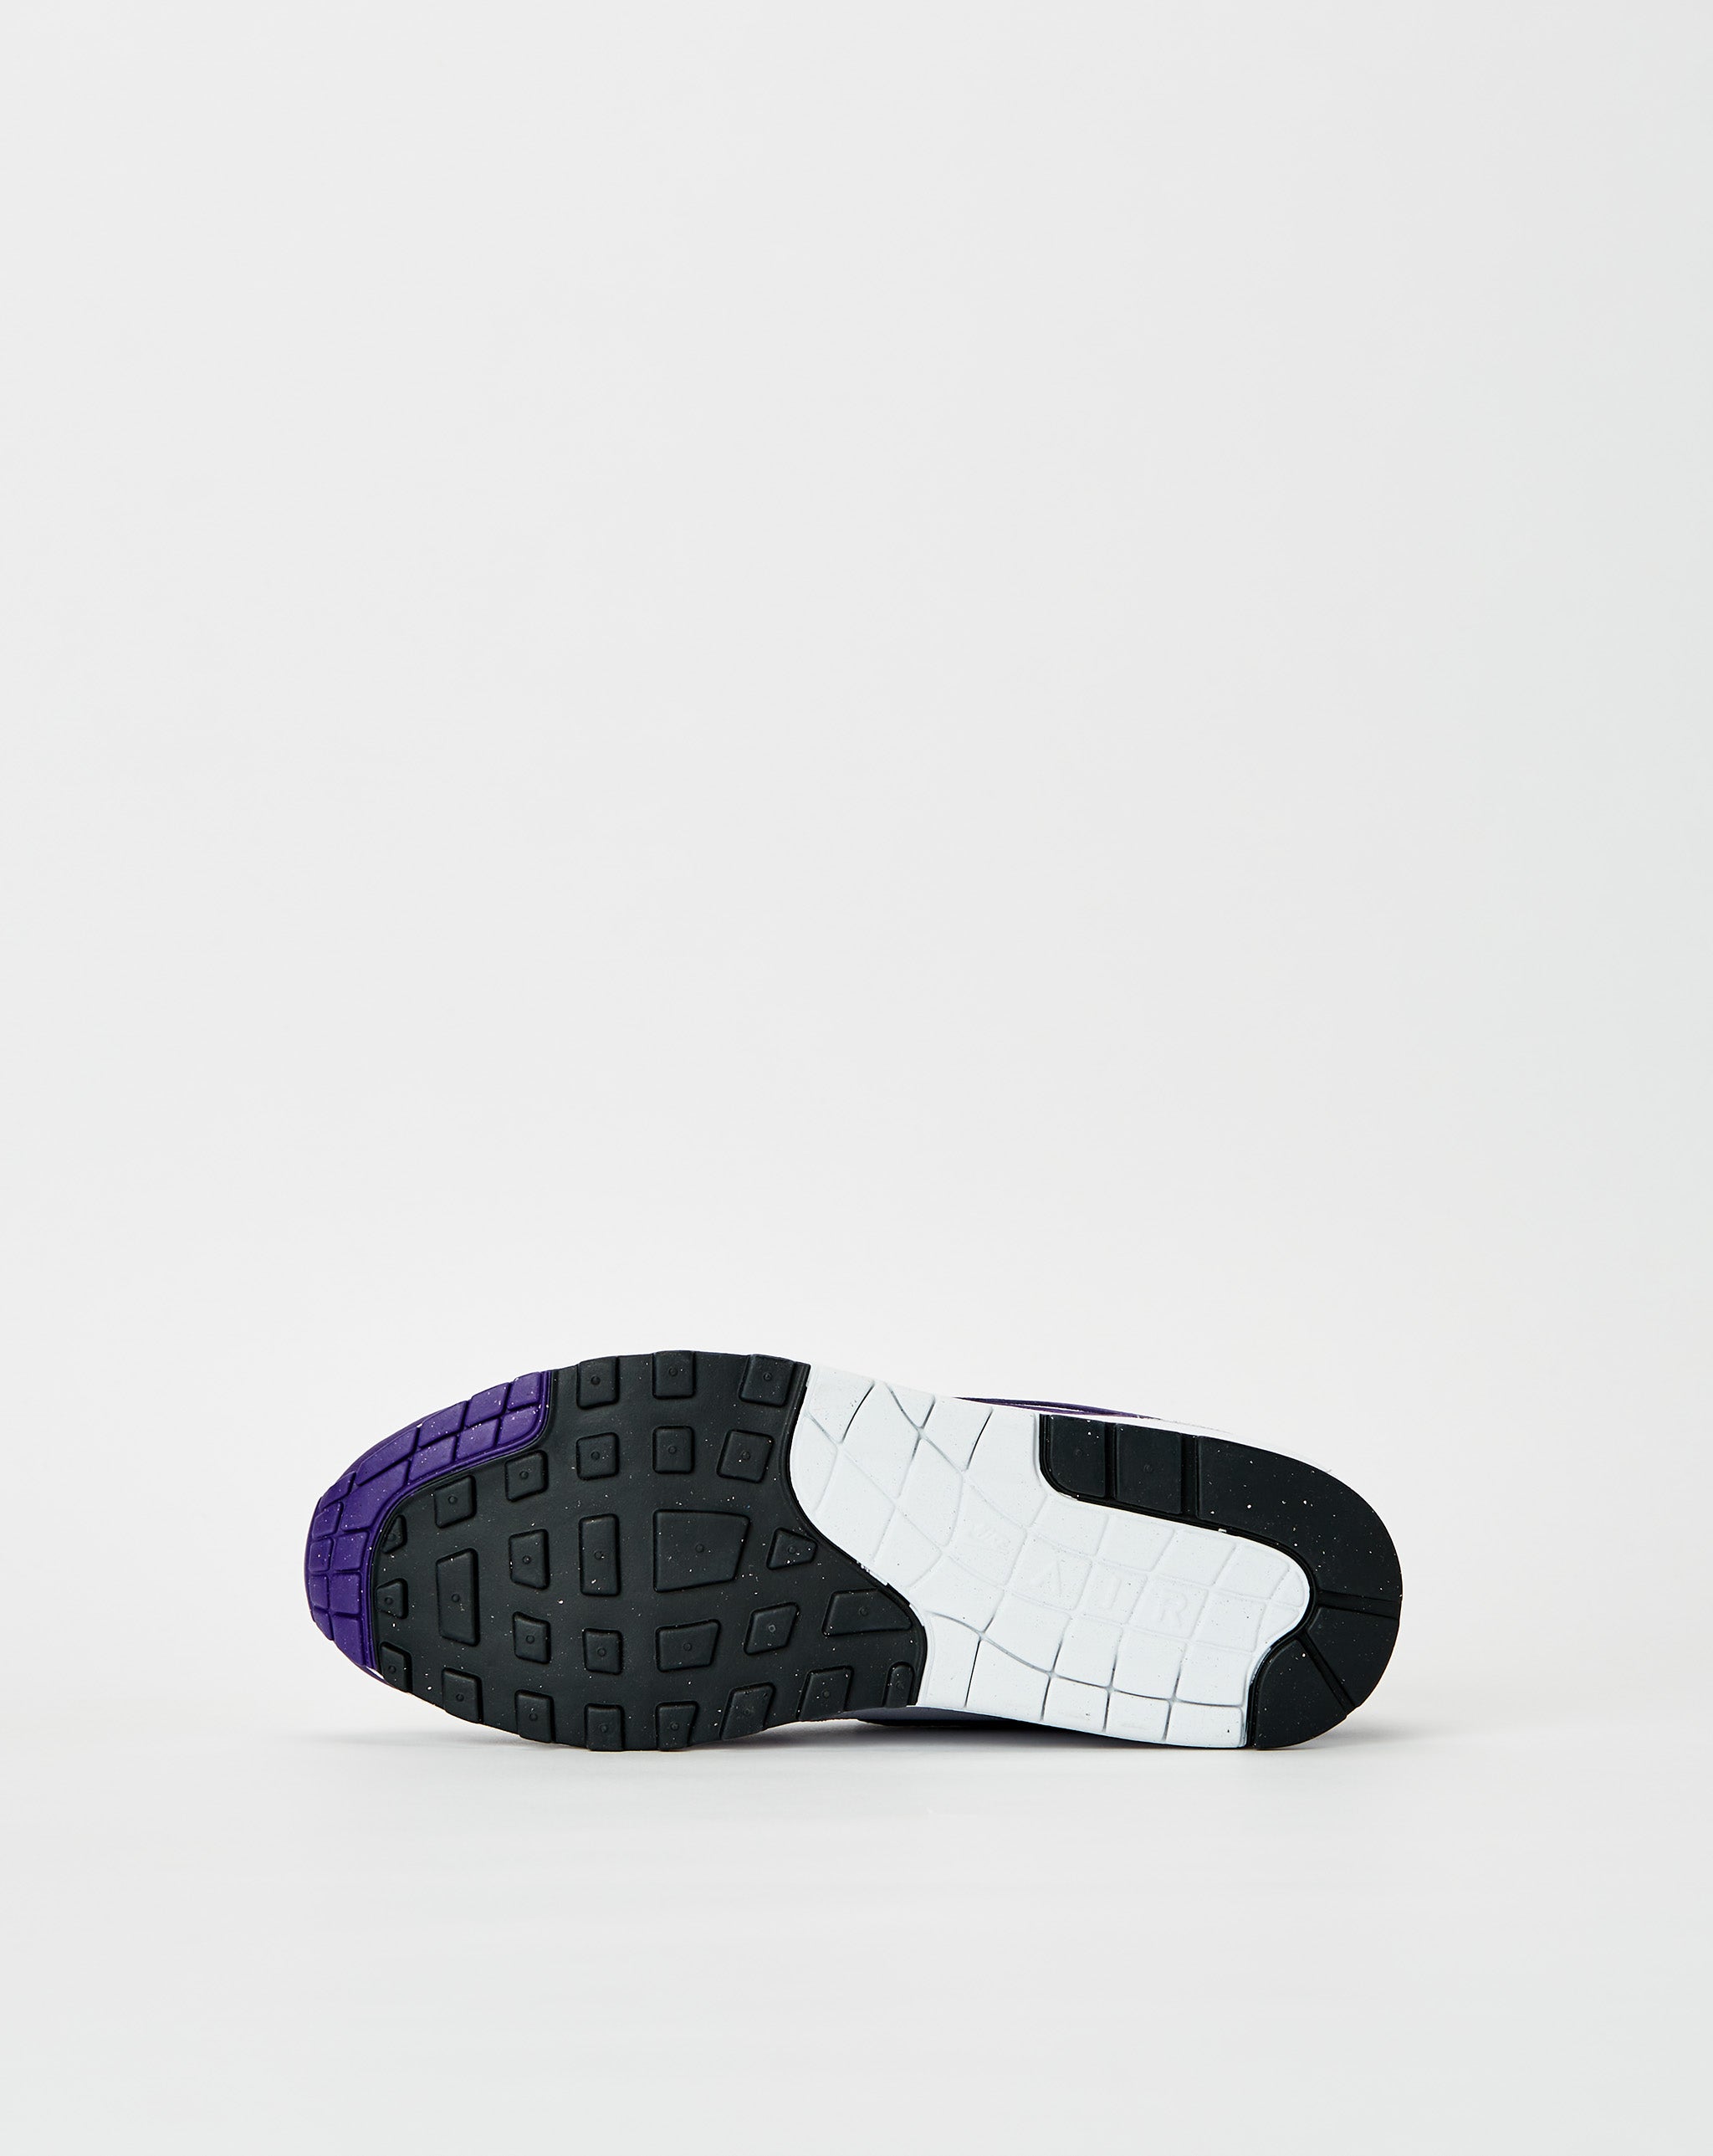 Nike shox remix nike men leather shoes black boots made  - Cheap Erlebniswelt-fliegenfischen Jordan outlet